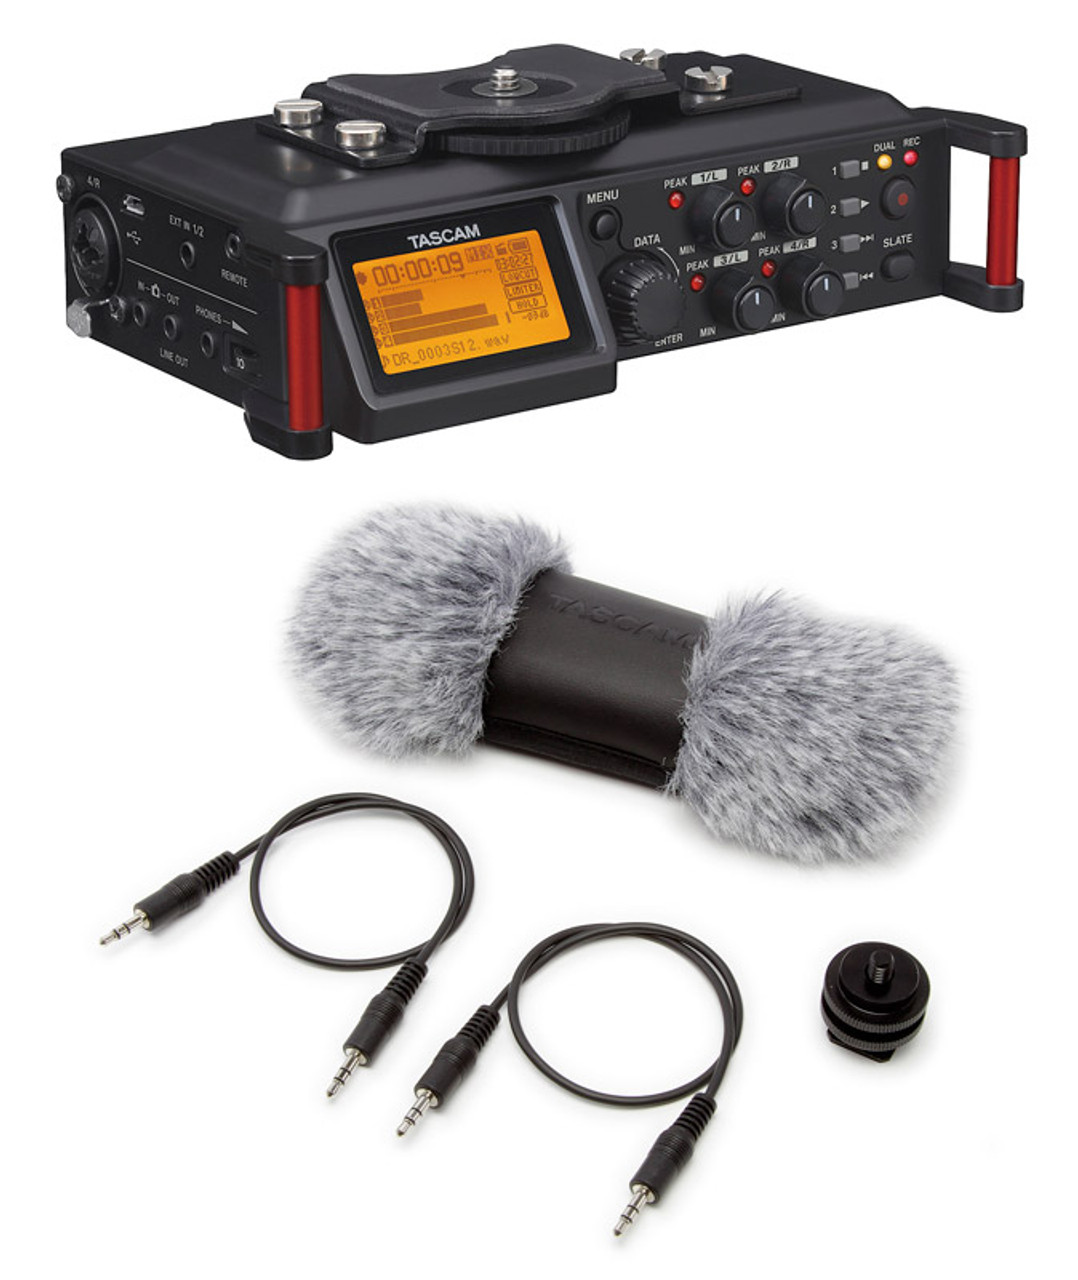 Tascam DR-70D 4-Channel Audio Recorder and Accessories Bundle